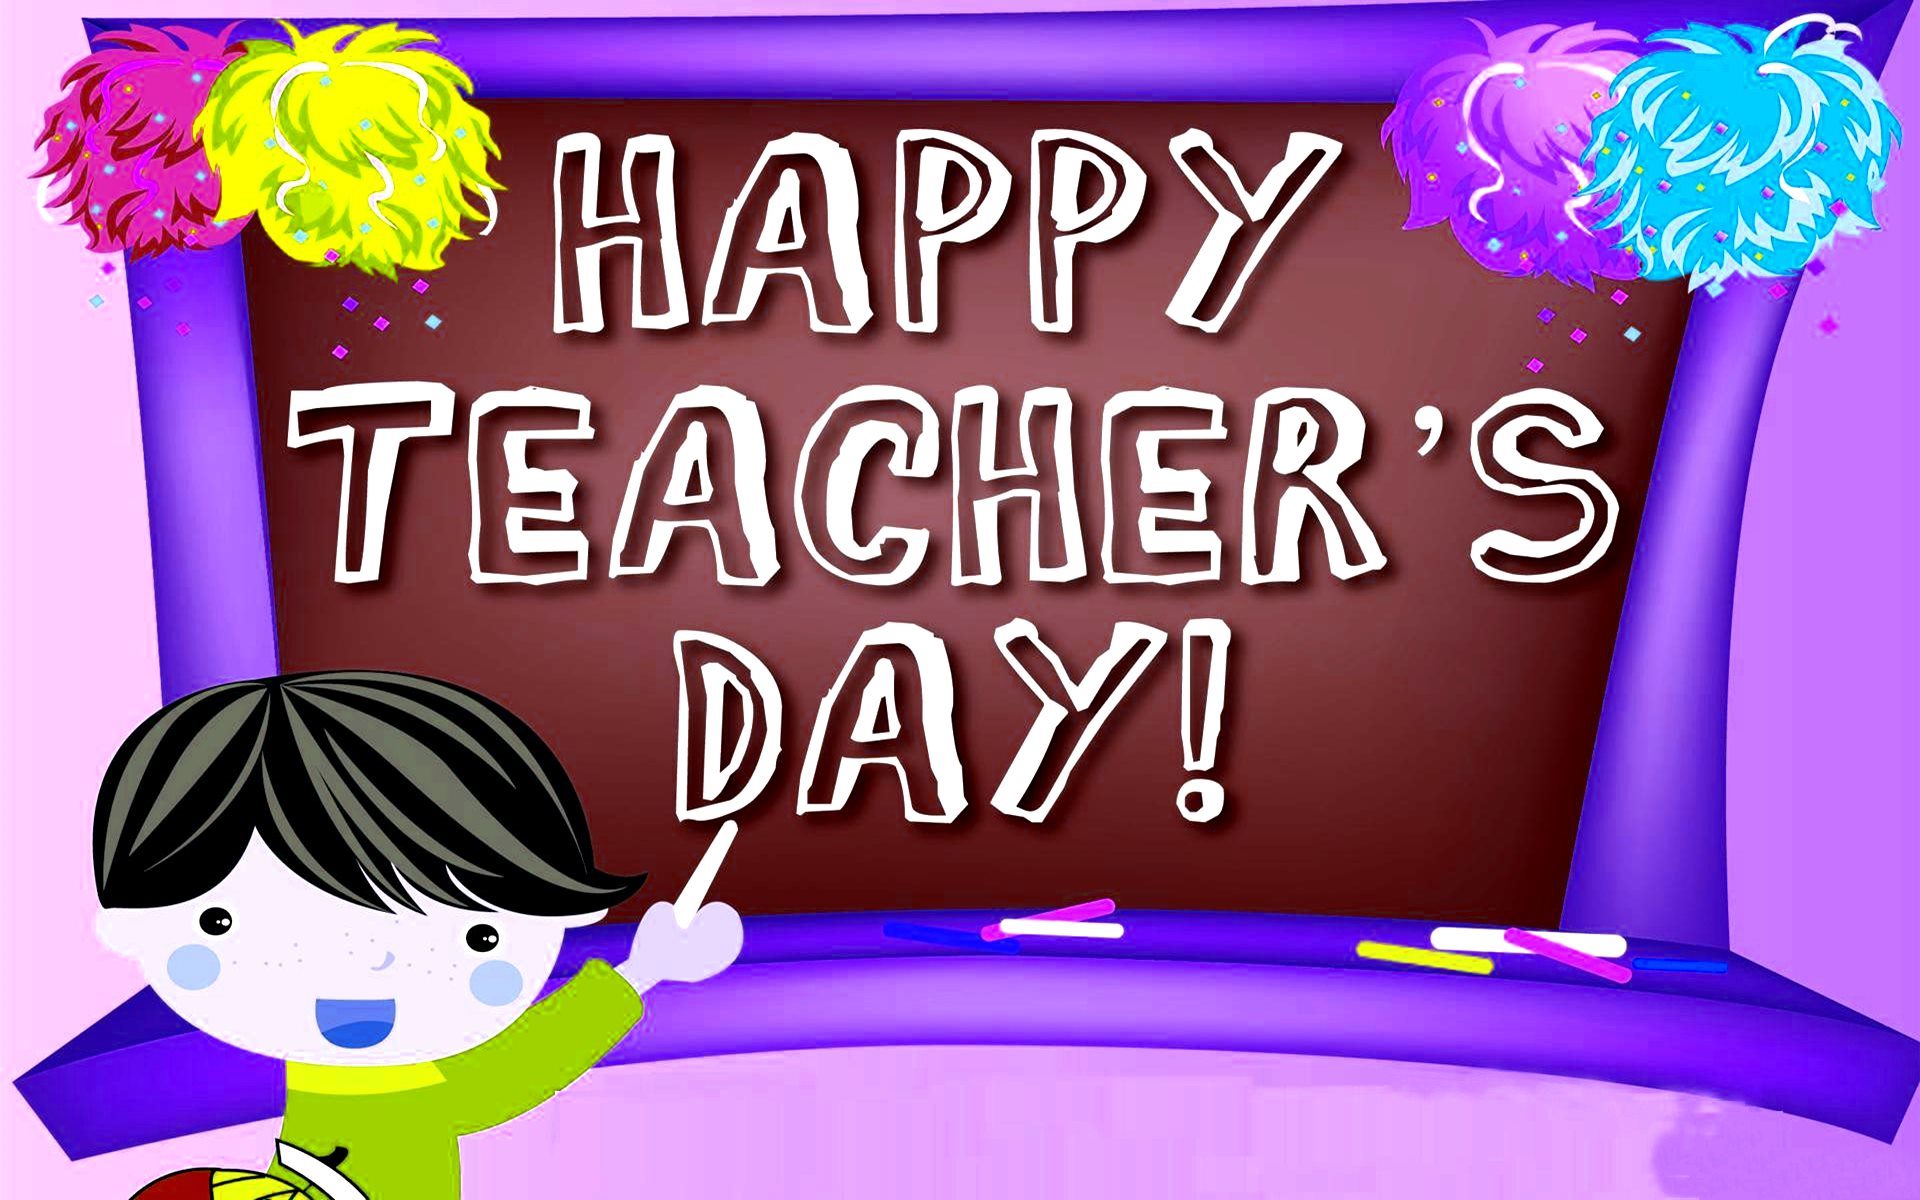 Happy Teachers Day Theme - 1920x1200 Wallpaper 